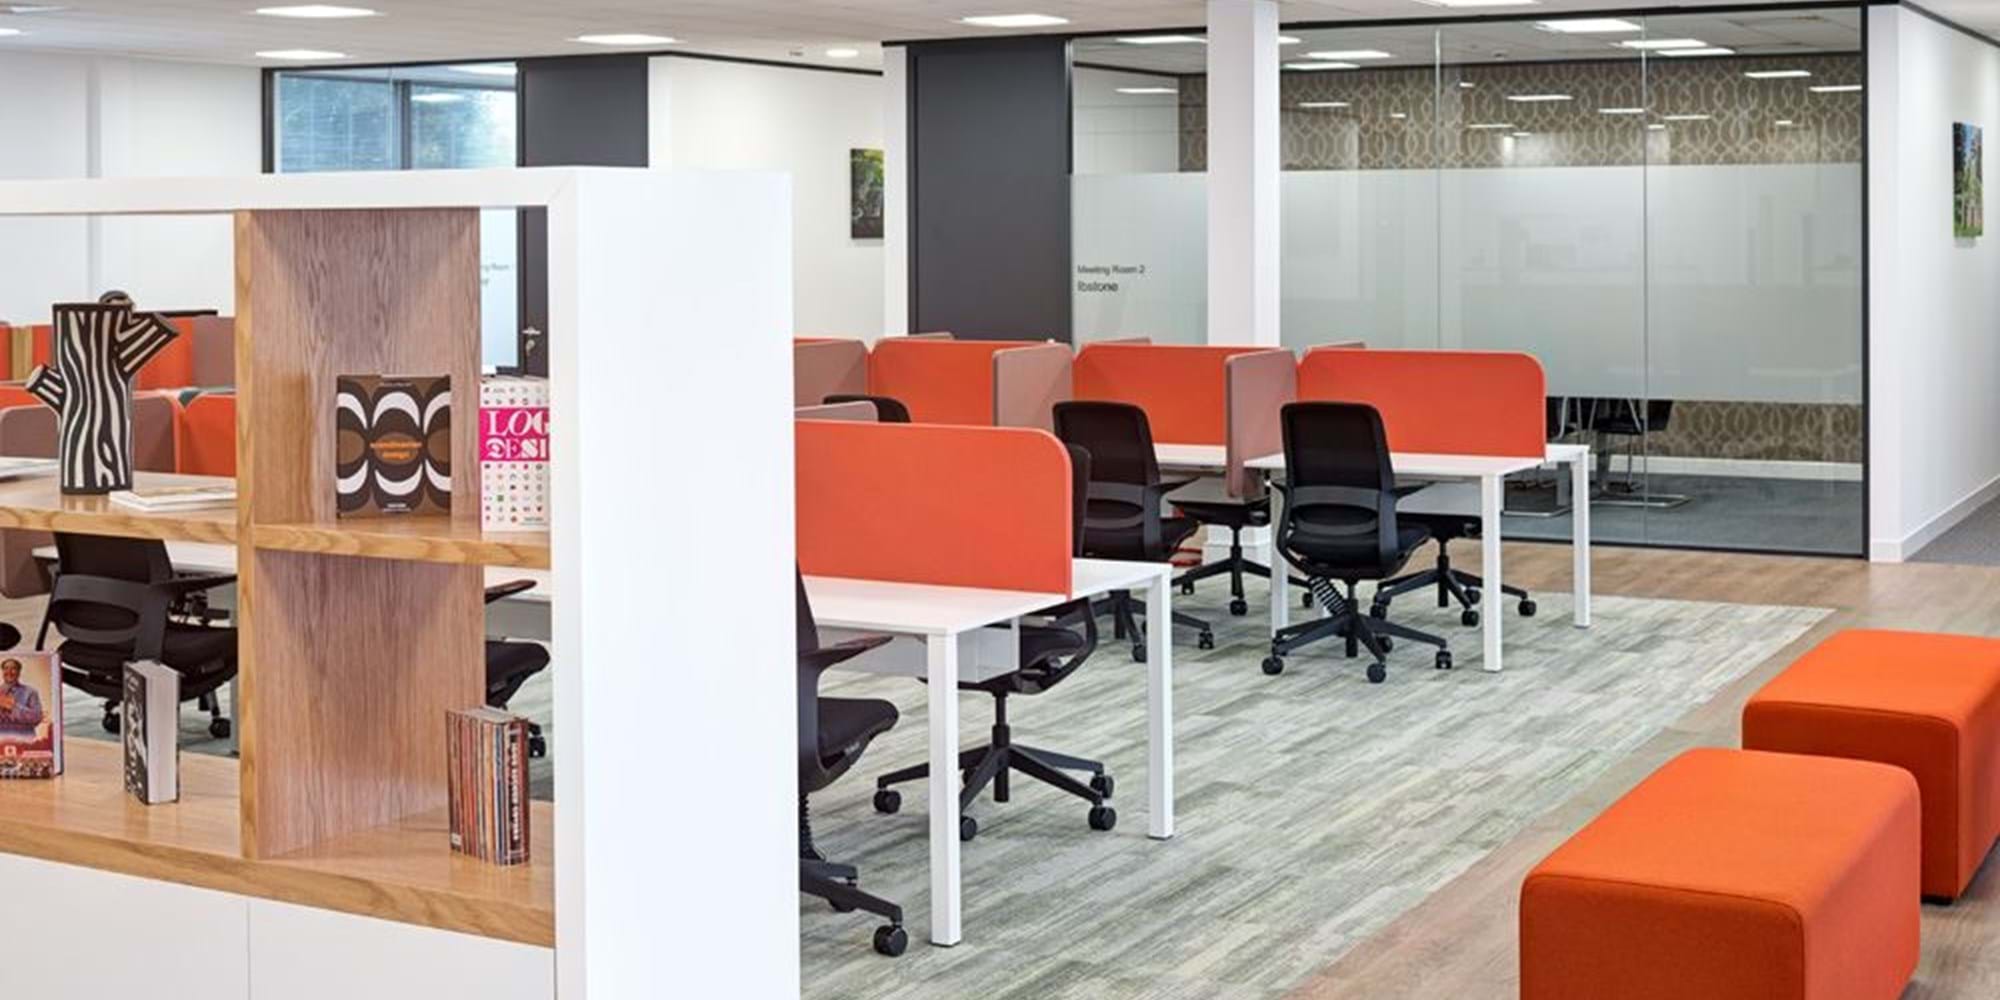 Modus Workspace office design, fit out and refurbishment - Regus Stokenchurch - Regus Gerrads Cross 03 highres sRGB.jpg